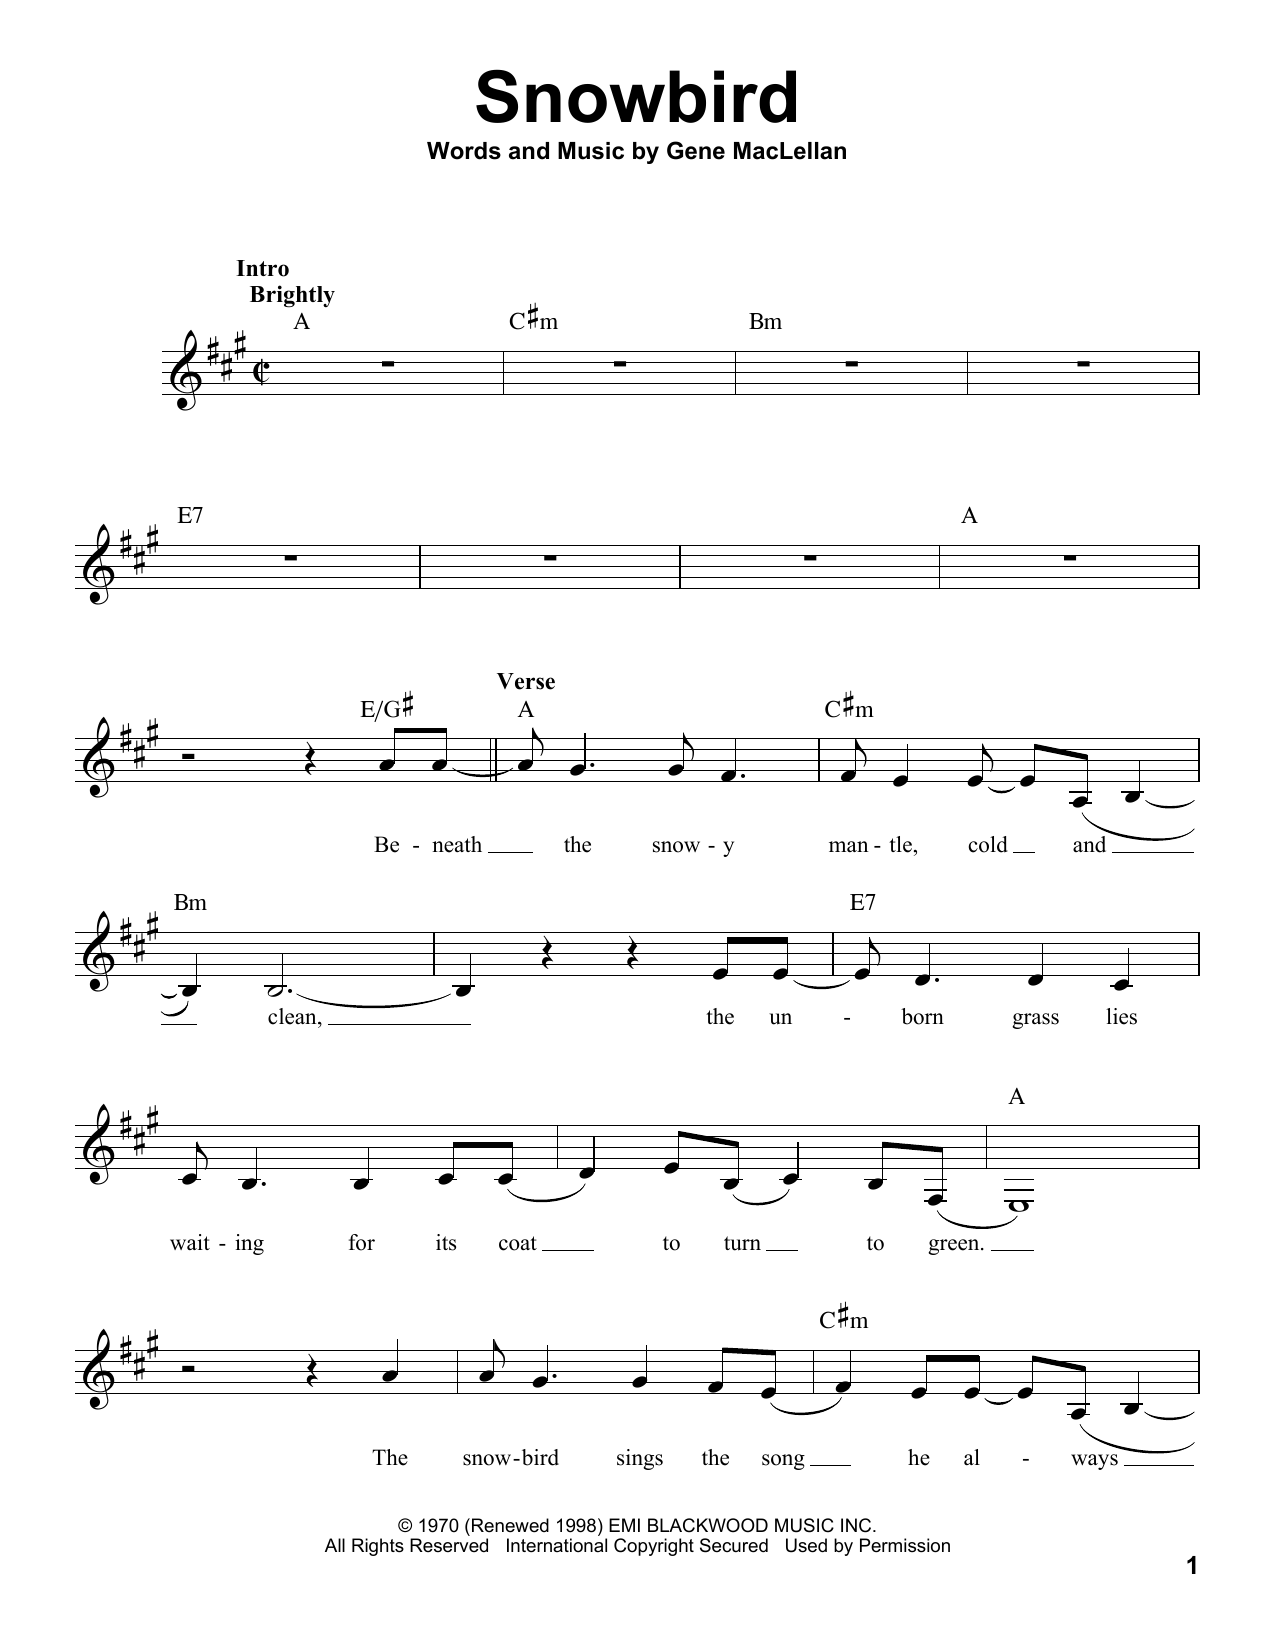 Gene MacLellan Snowbird Sheet Music Notes & Chords for Lead Sheet / Fake Book - Download or Print PDF